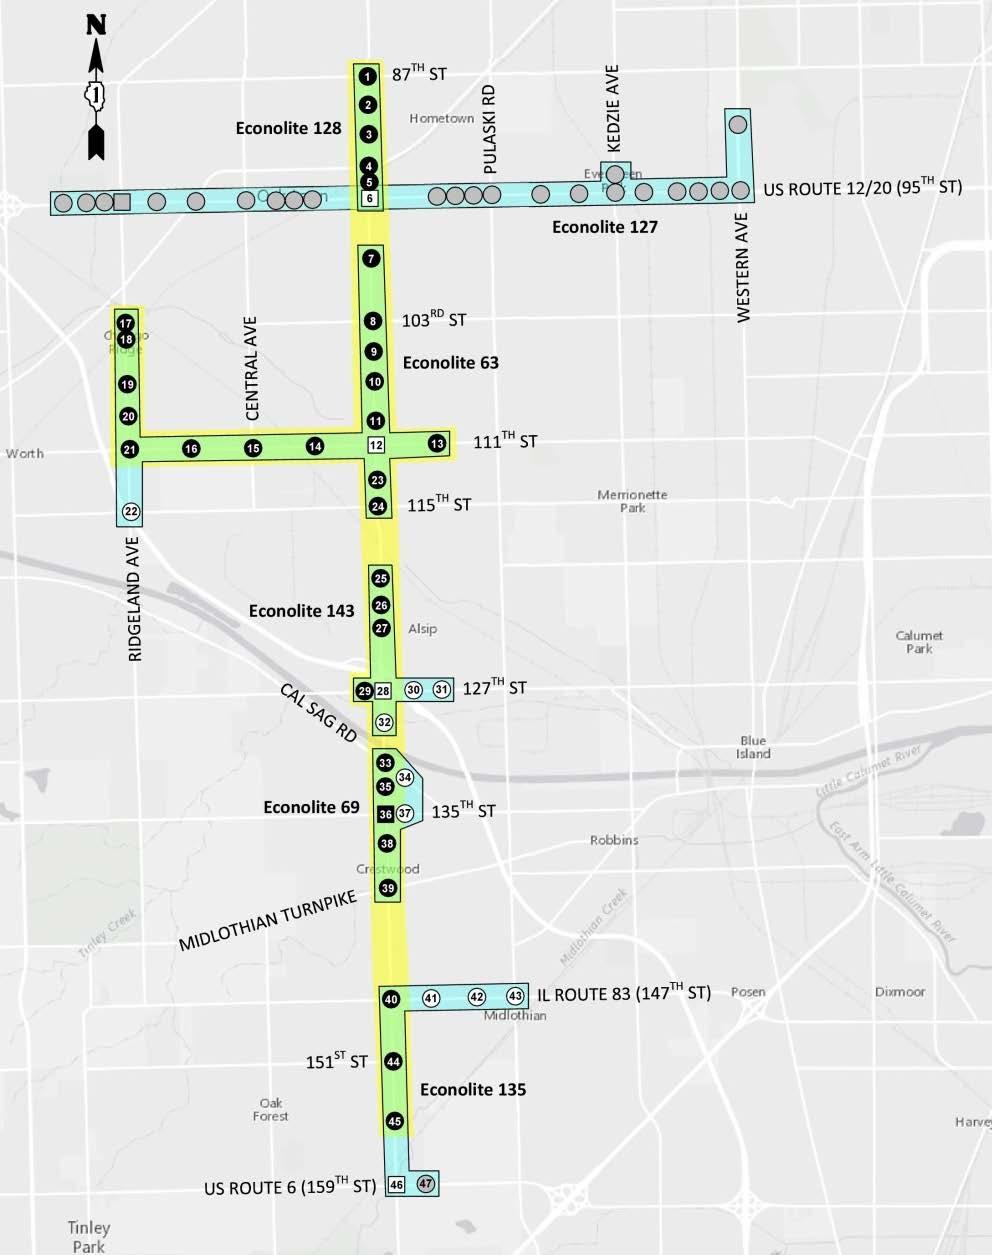 Cicero Avenue Corridor Limits: 87 th St. to 159 th St.